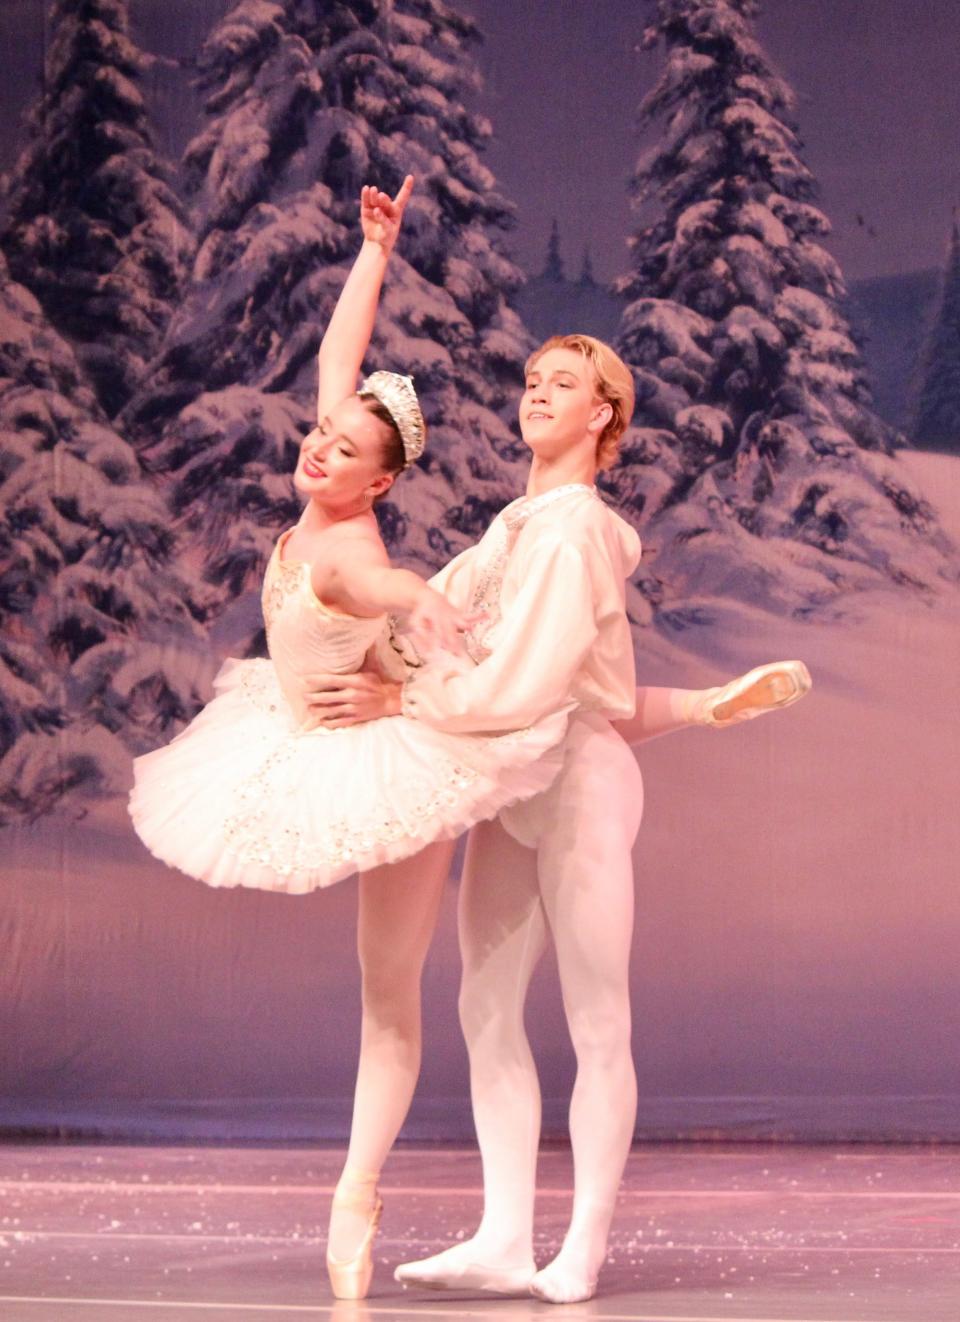 The Paris Ballet will perform The Nutcracker on Sunday, Dec. 11 at 3 p.m.